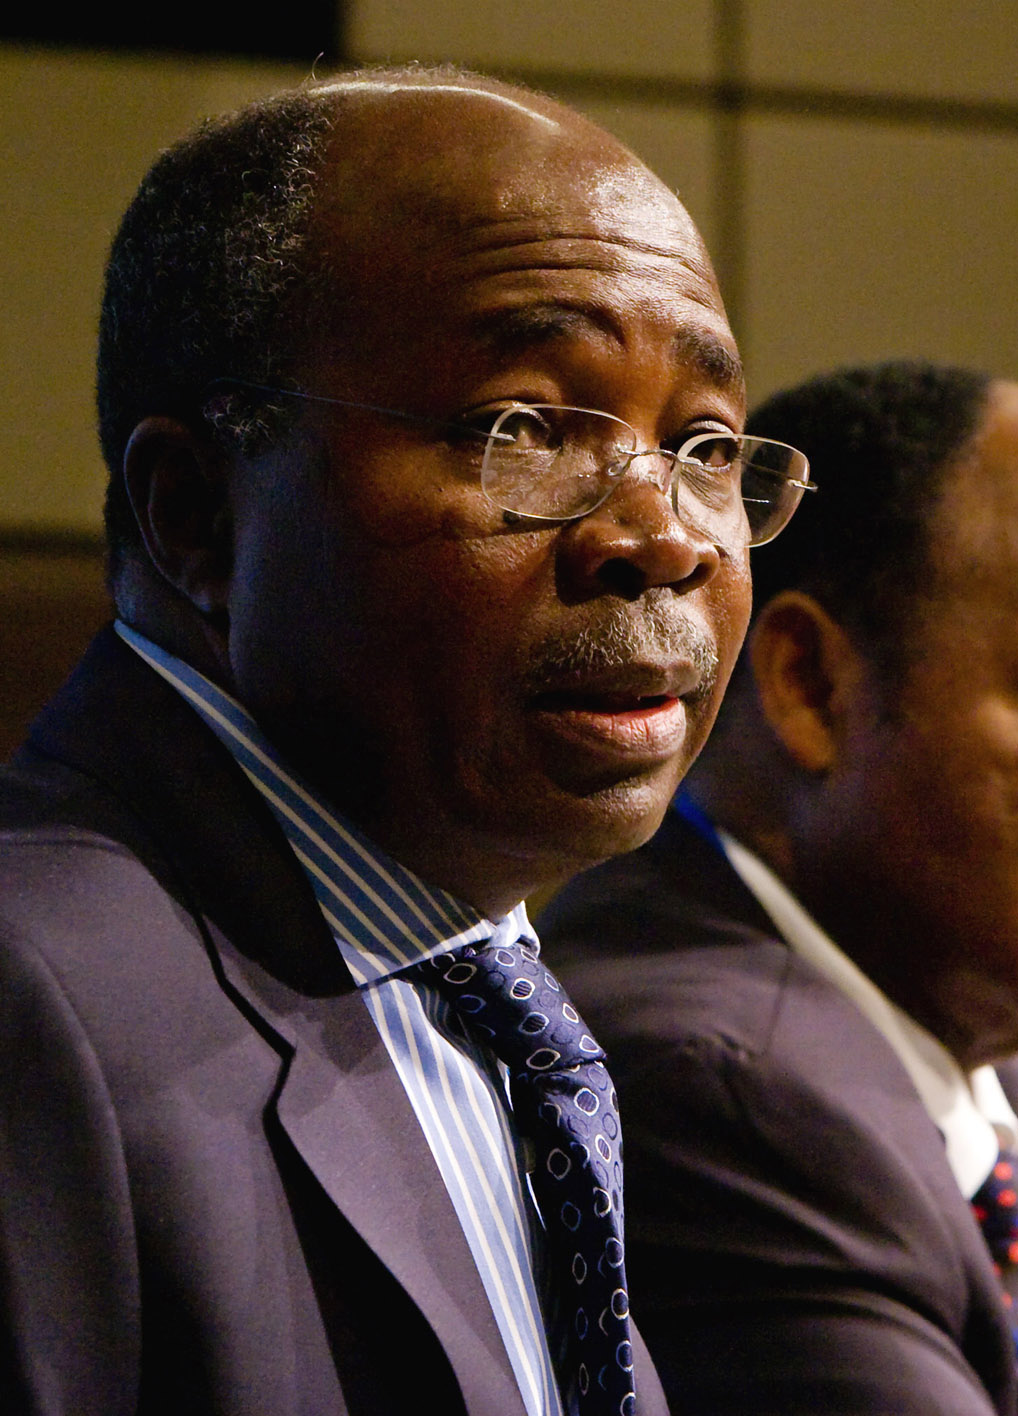 Zambian finance minister says talks with IMF 'very progressive'